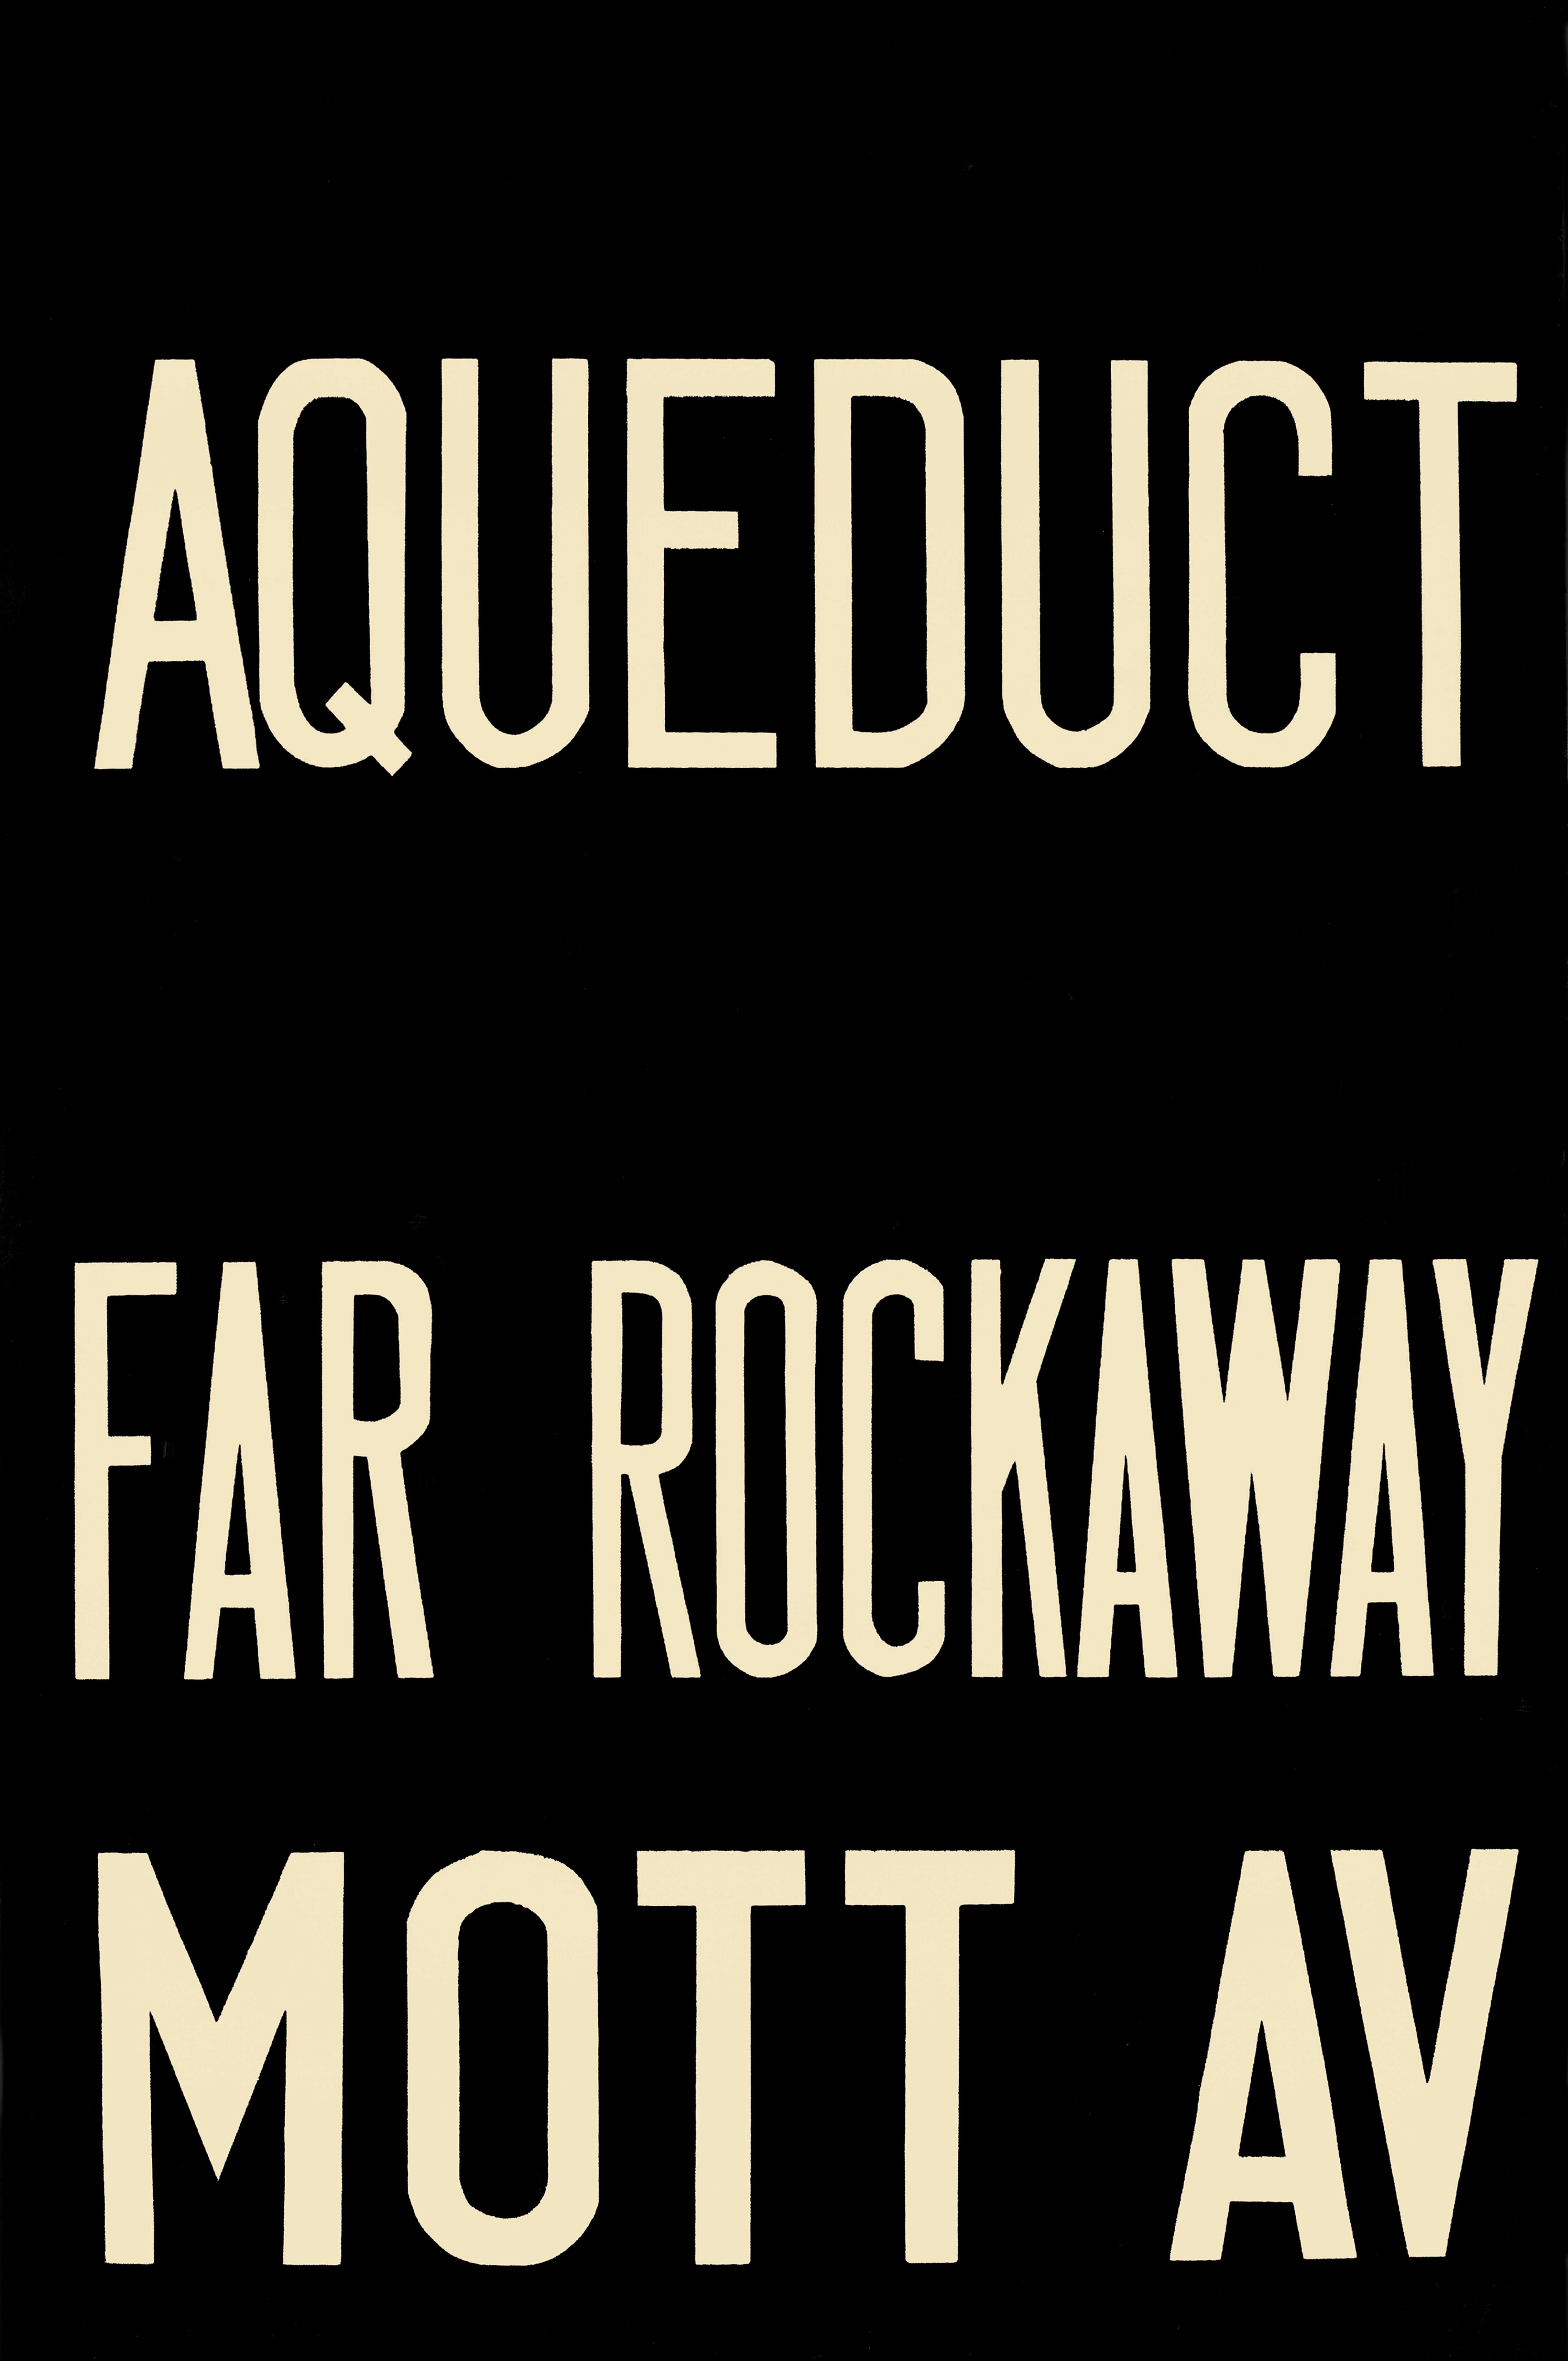 Unknown Figurative Print - NYC subway sign - Aqueduct / Far Rockaway Mott Ave